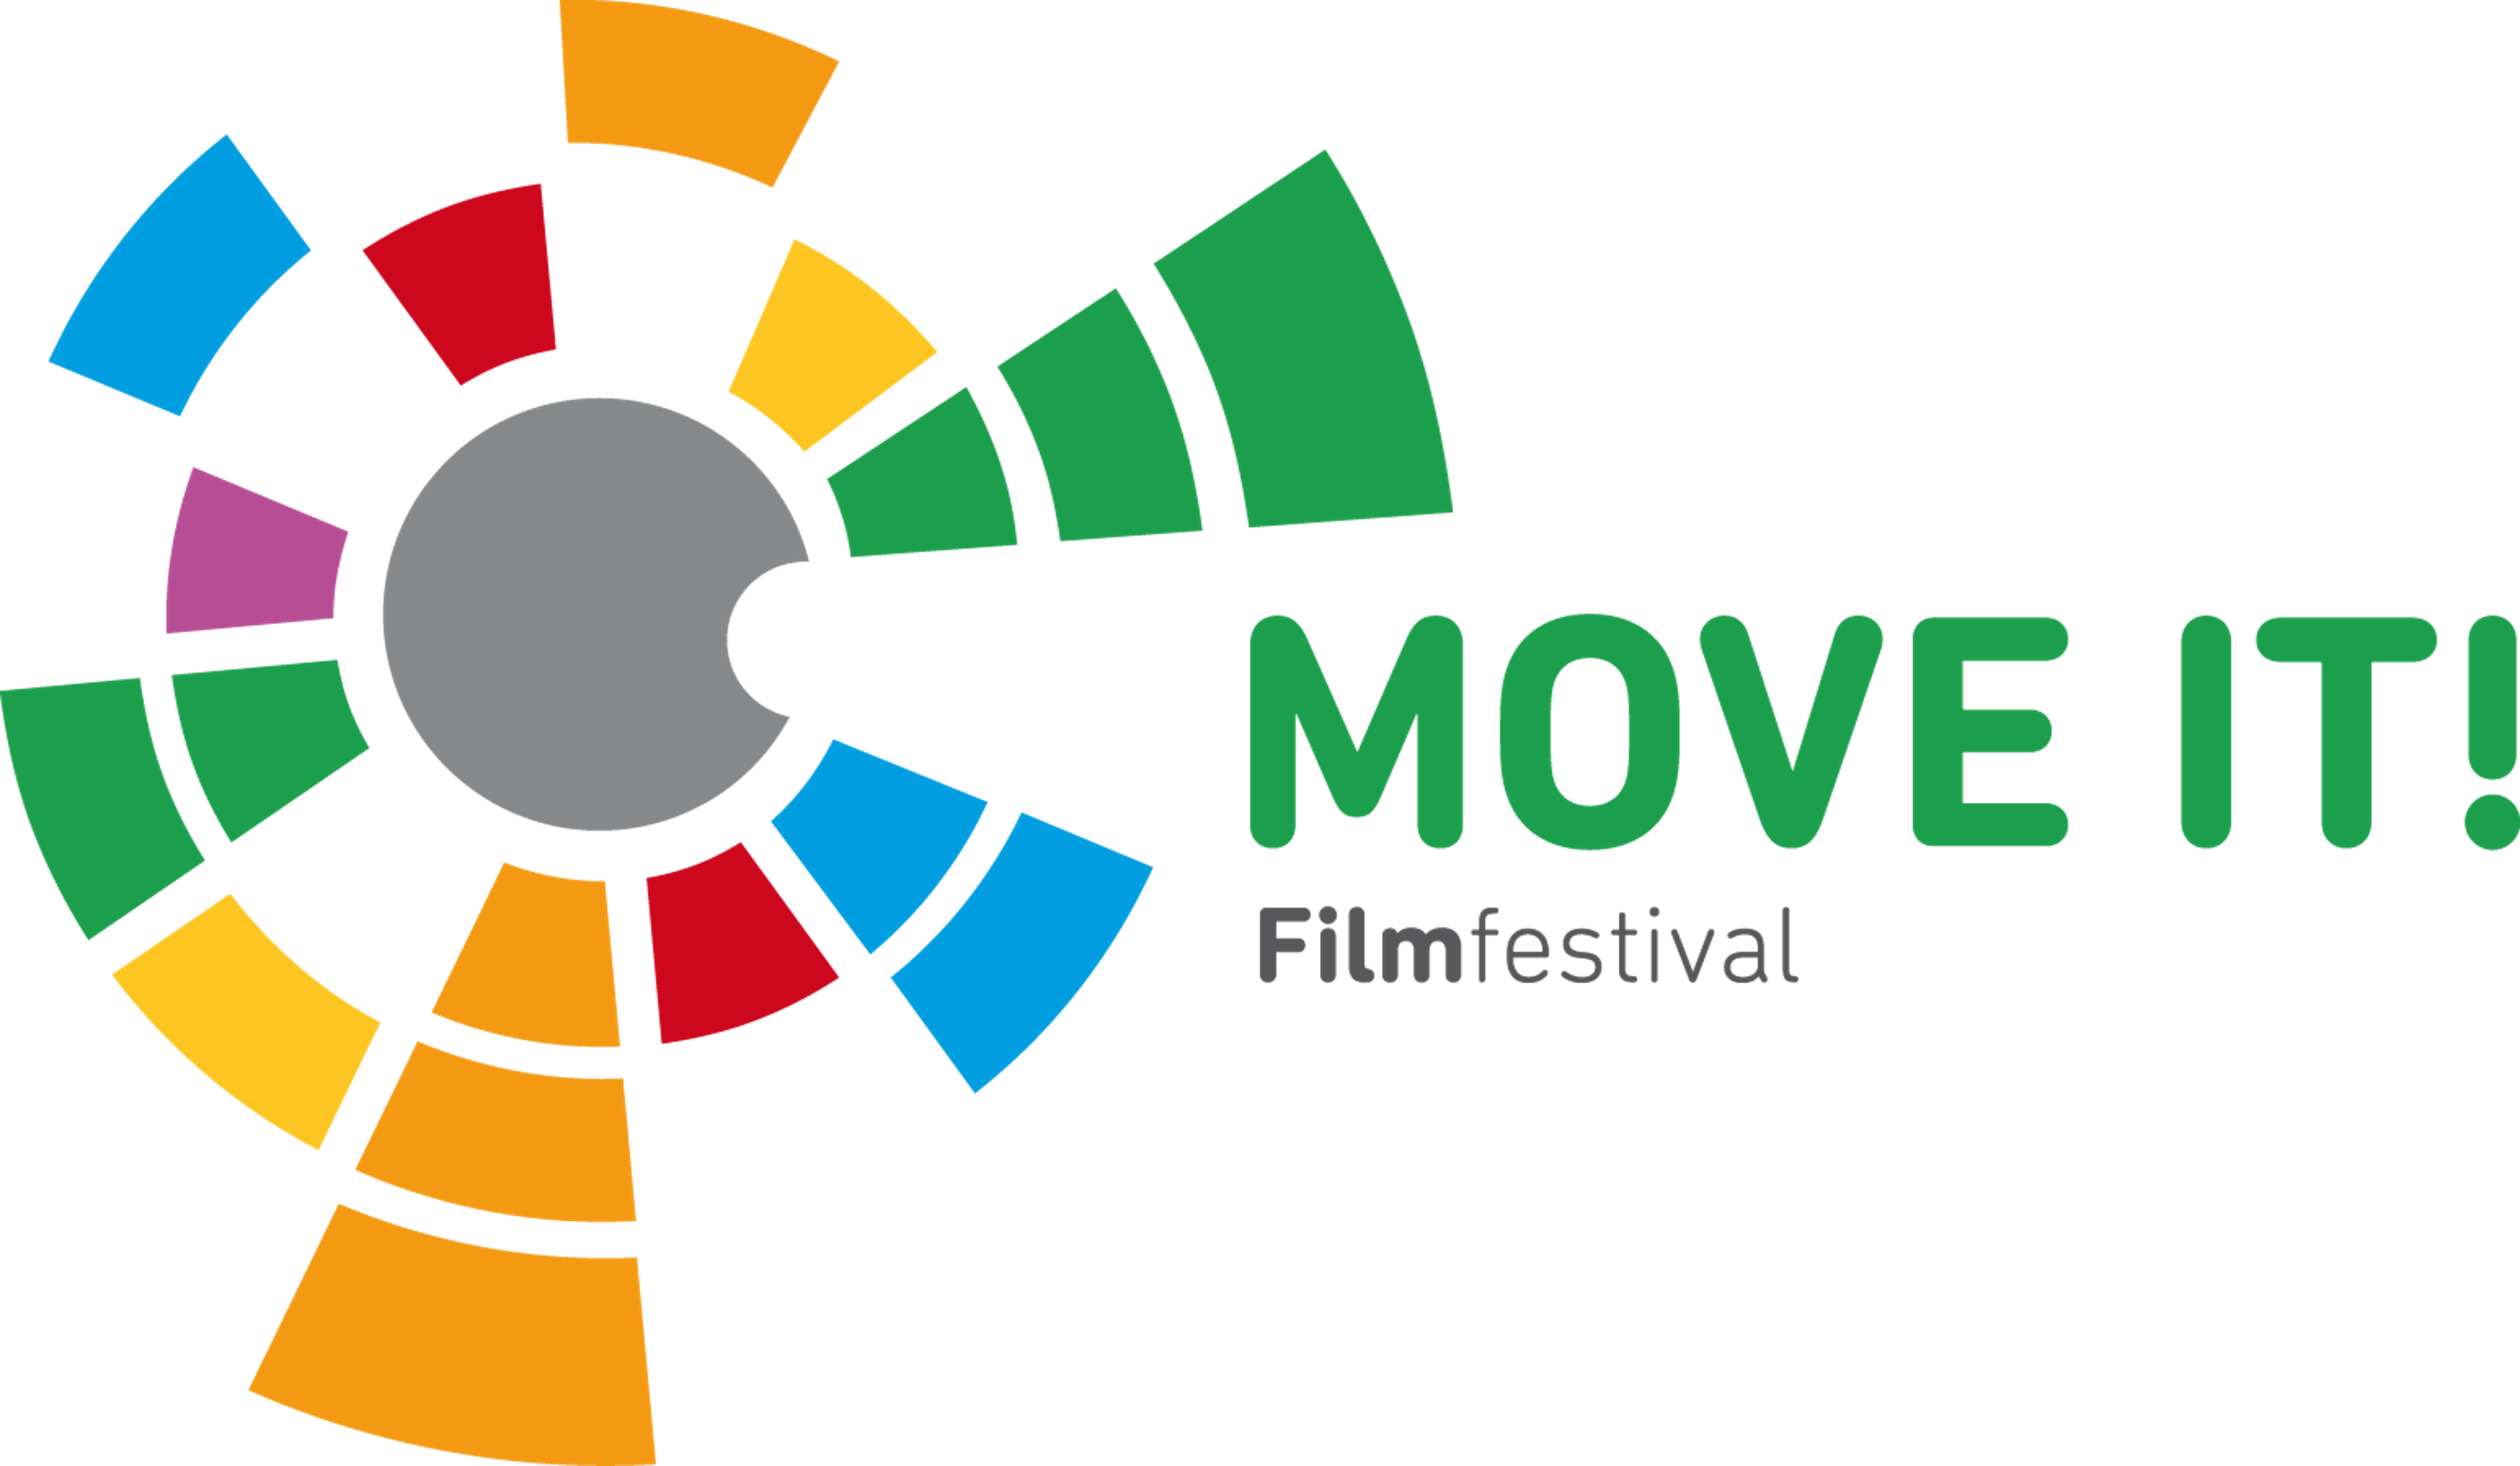 MOVE IT! Filmfestival